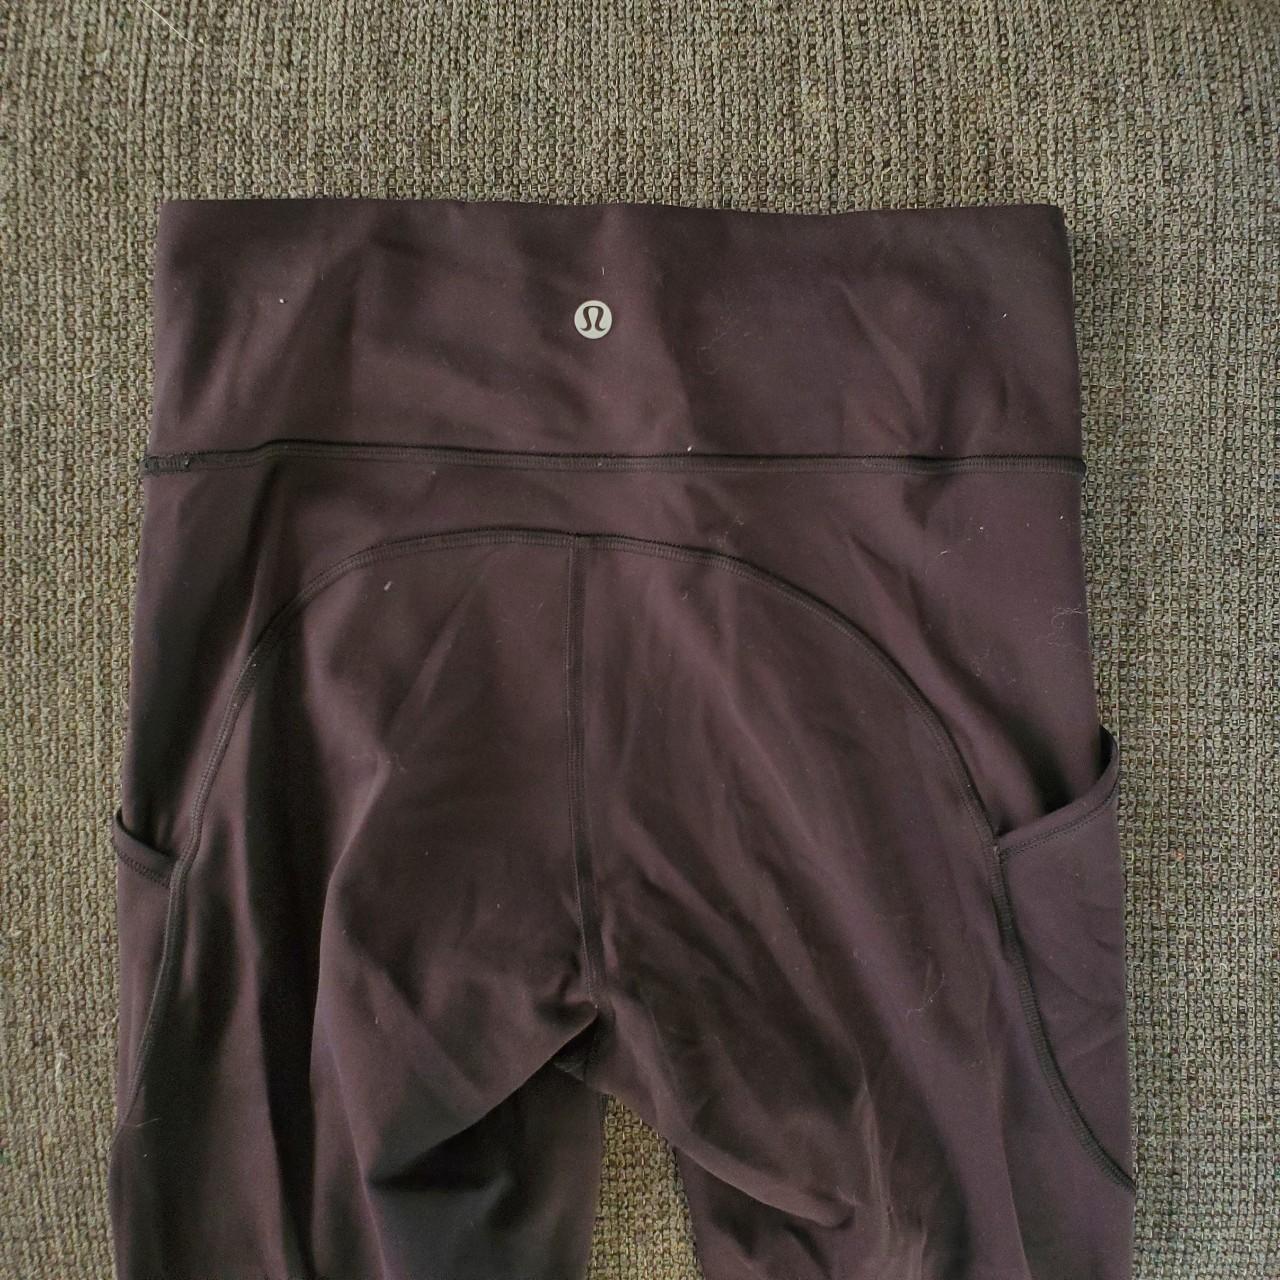 Black Lululemon invigorate leggings with pockets - Depop